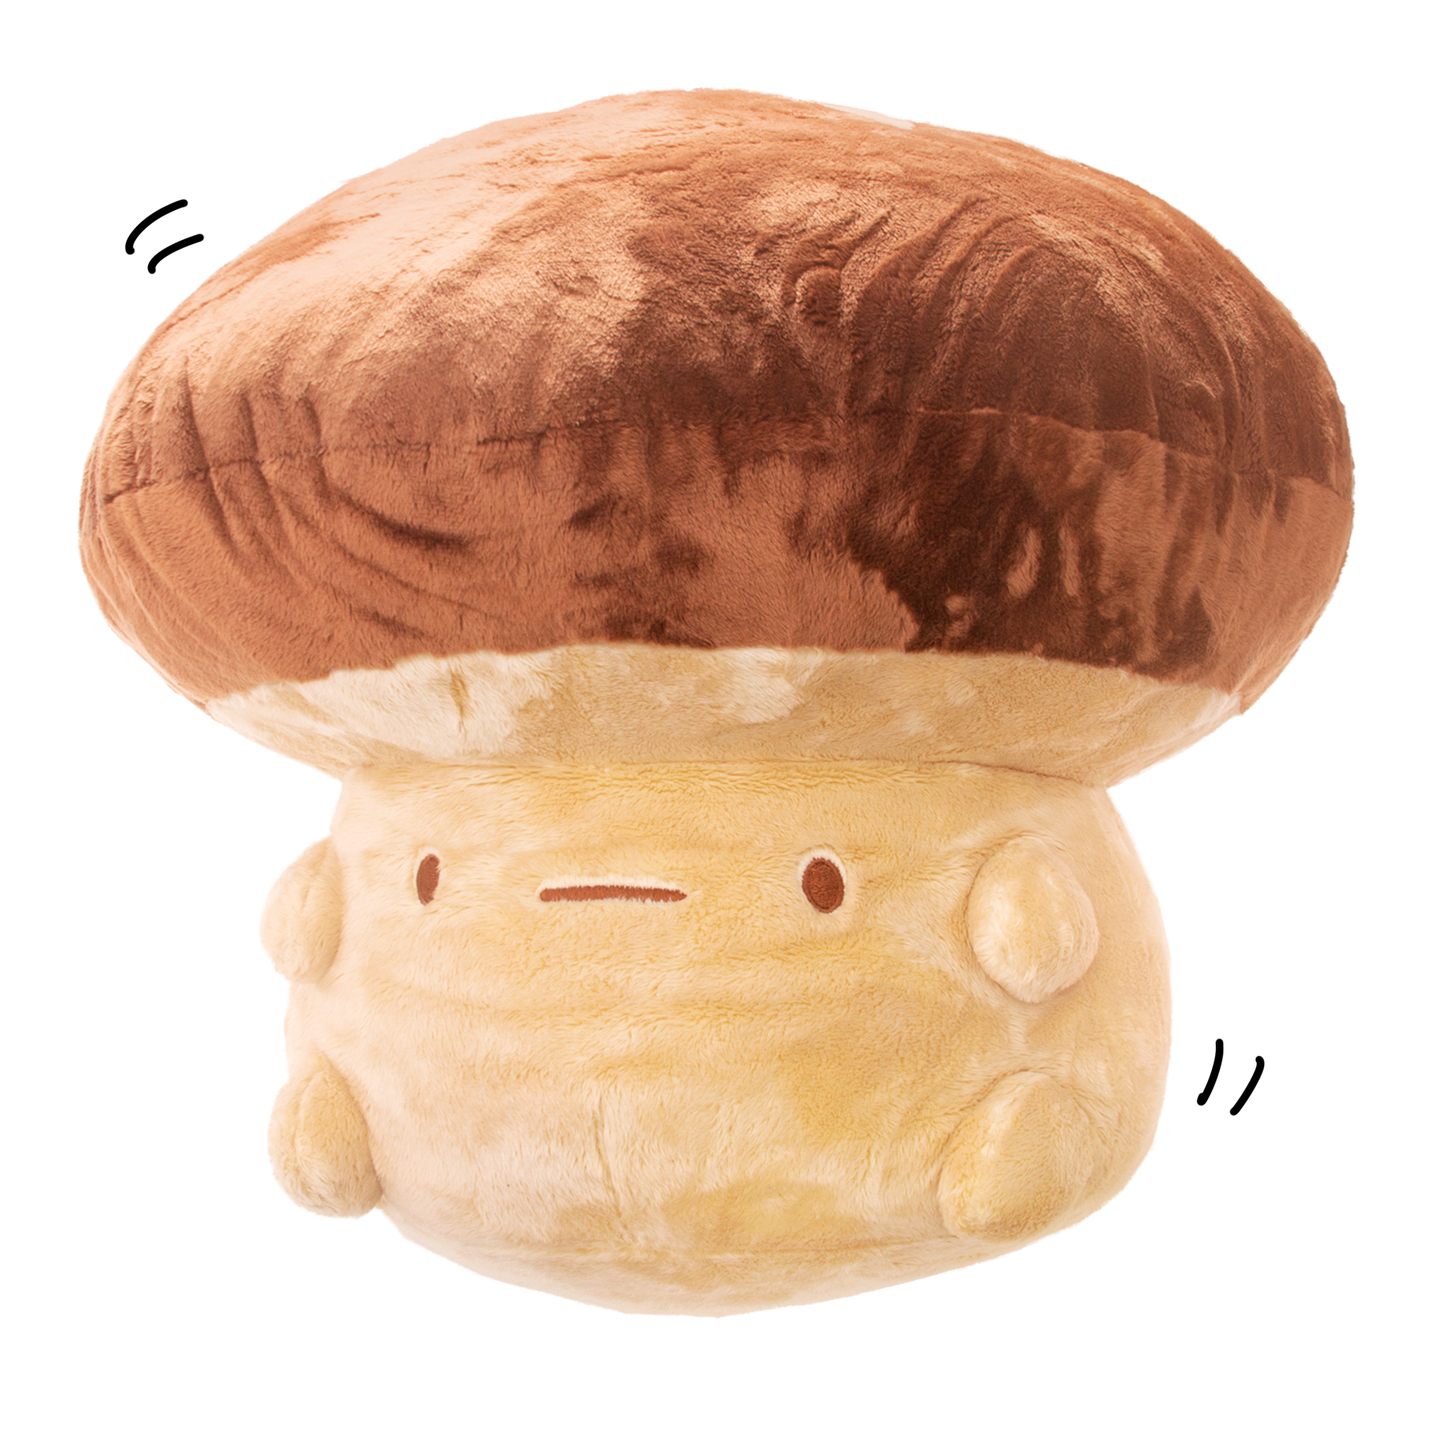 Gus the Shiitake Mushroom